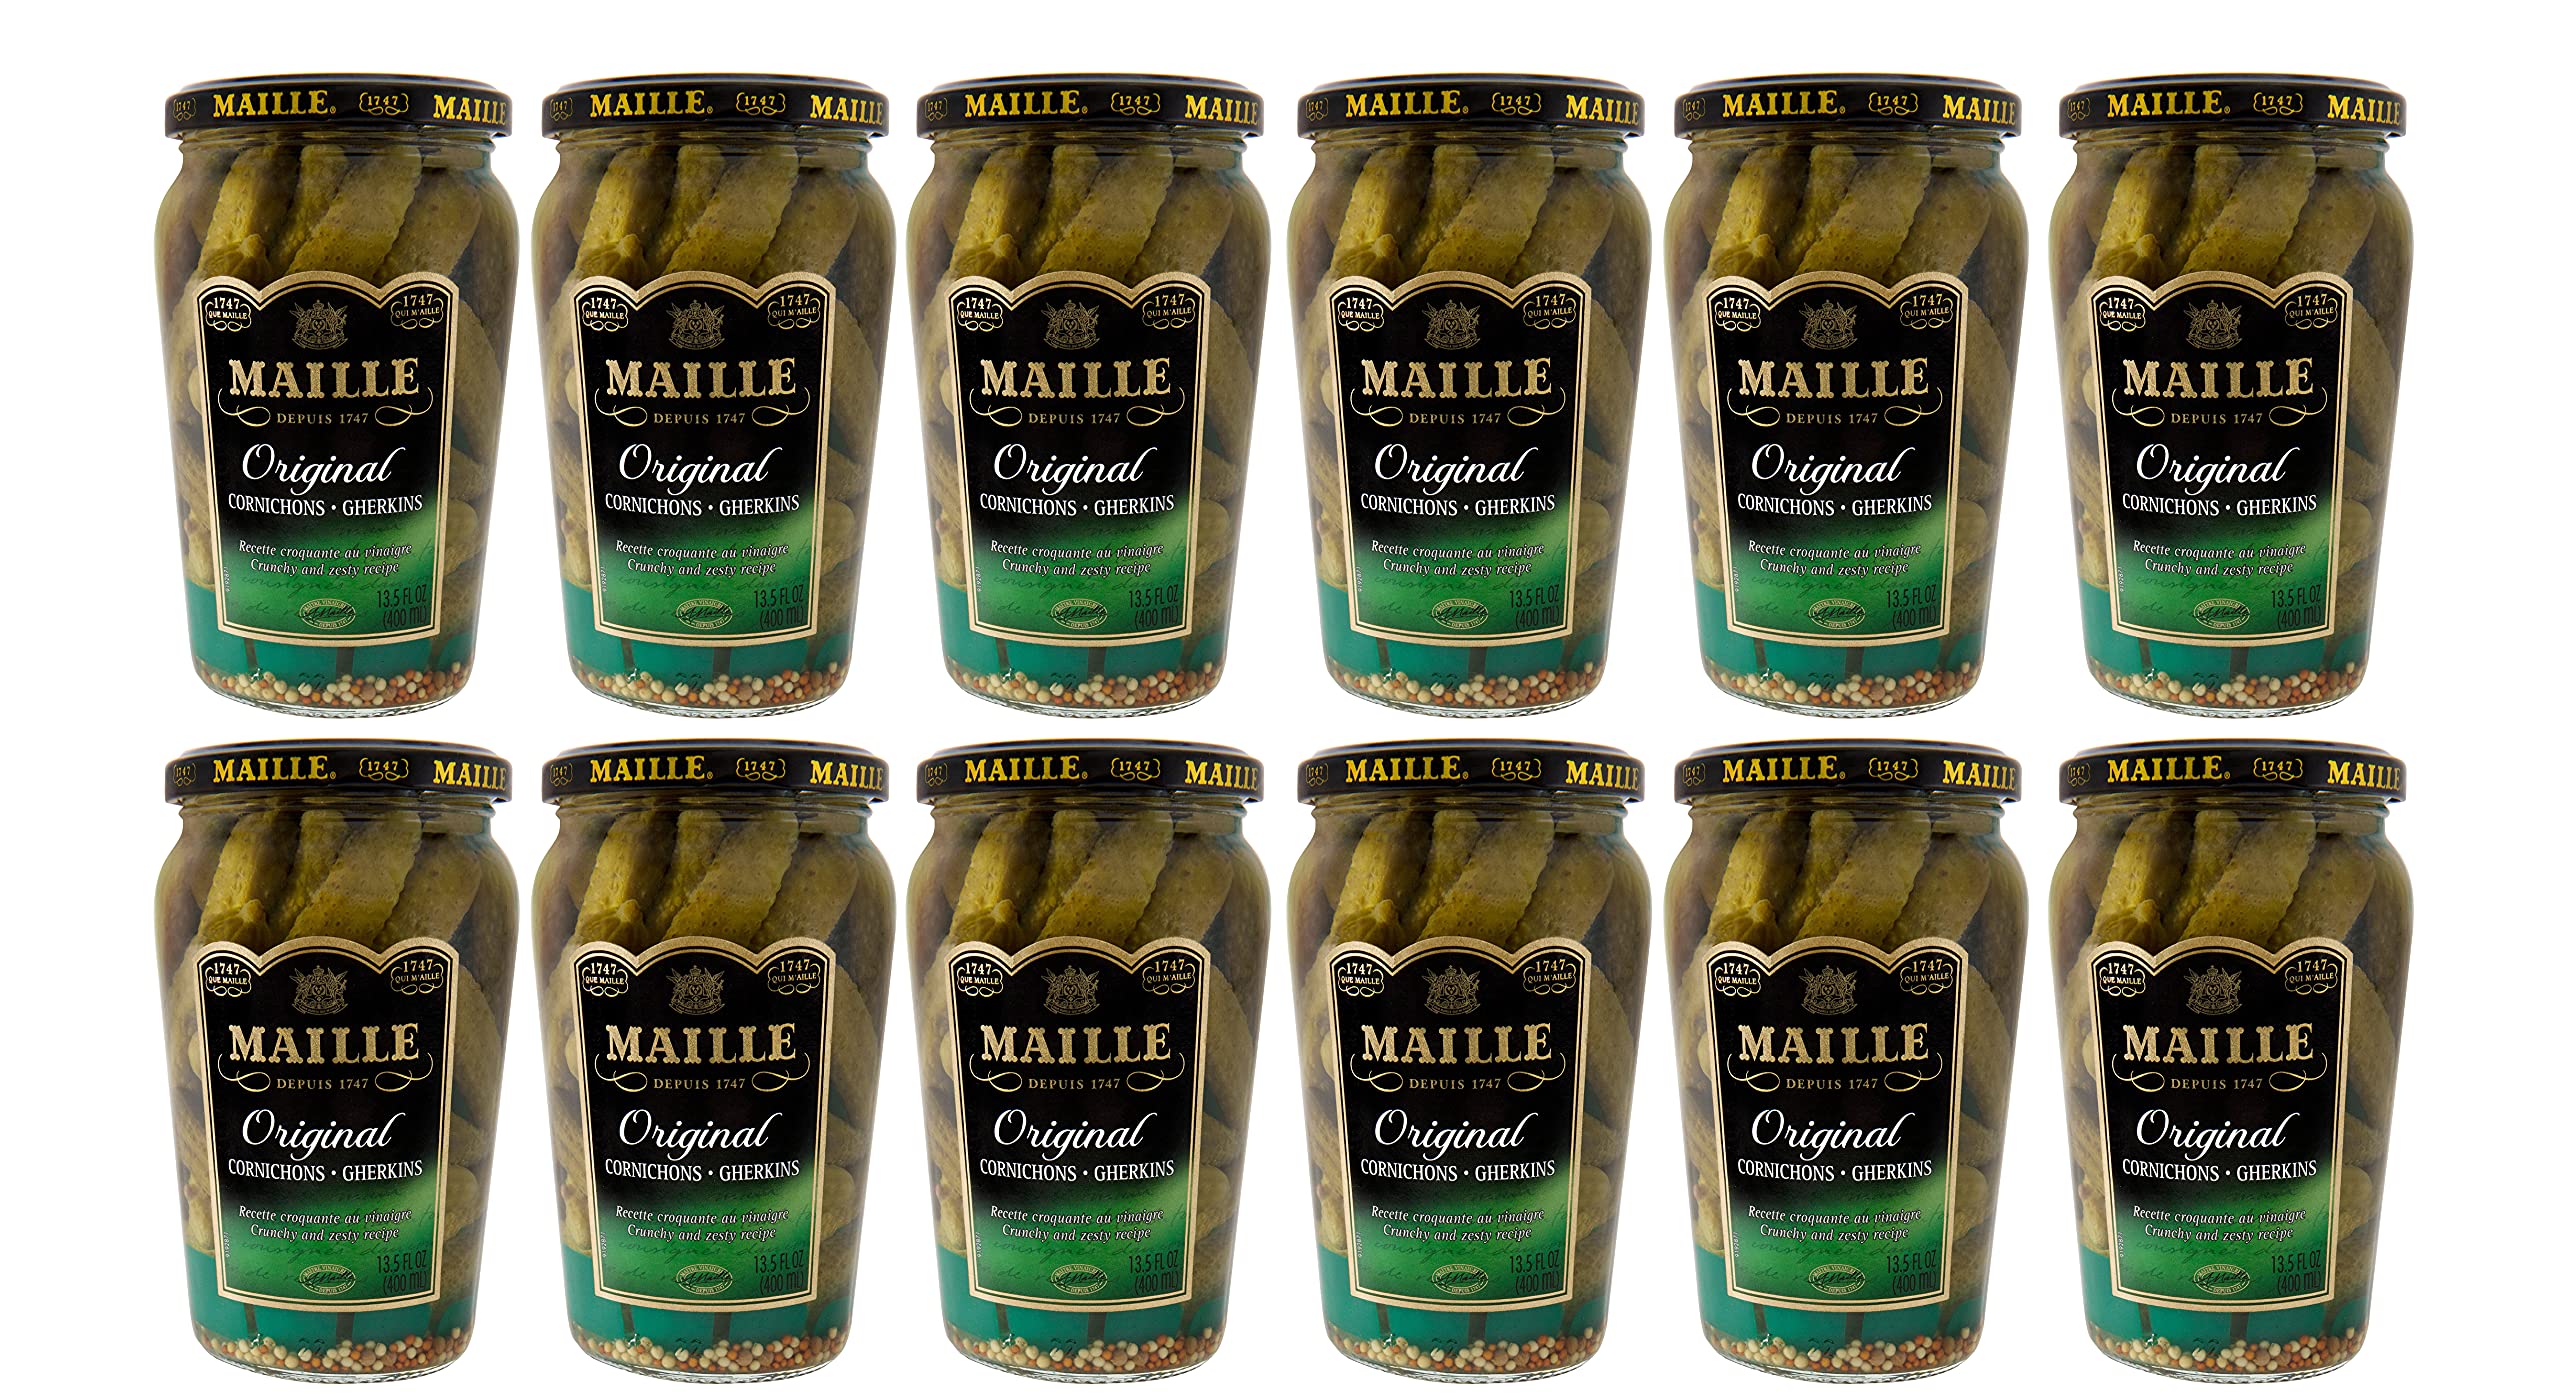 Maille Original Cornichons Gherkins Pickles, 13.5 fl oz Jar